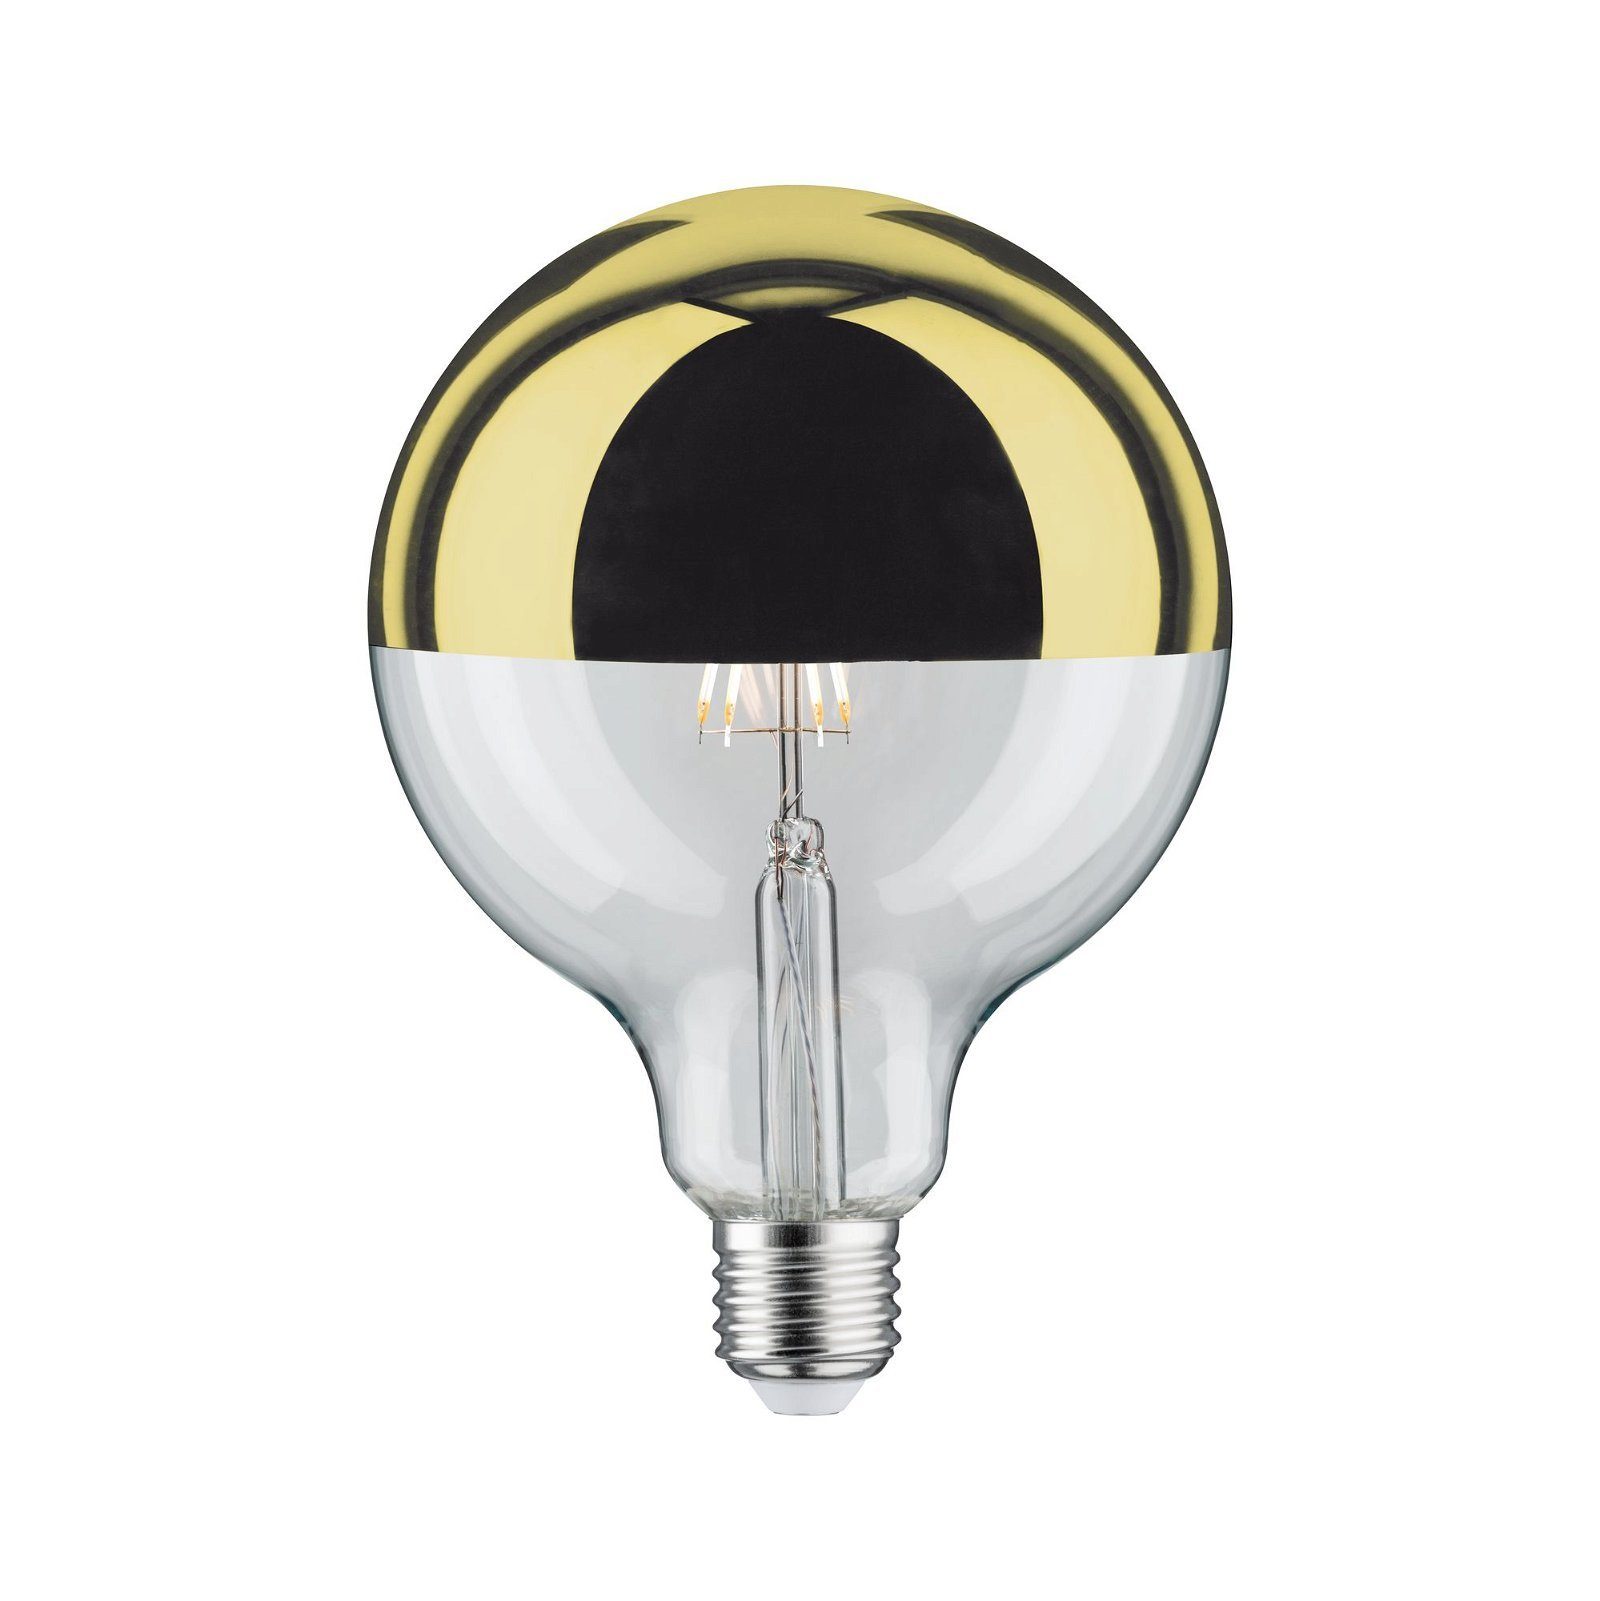 Paulmann LED-Leuchtmittel G125 Kopfspiegel 600lm 2700K 6,5W 230V gold, 1 St., Warmweiß